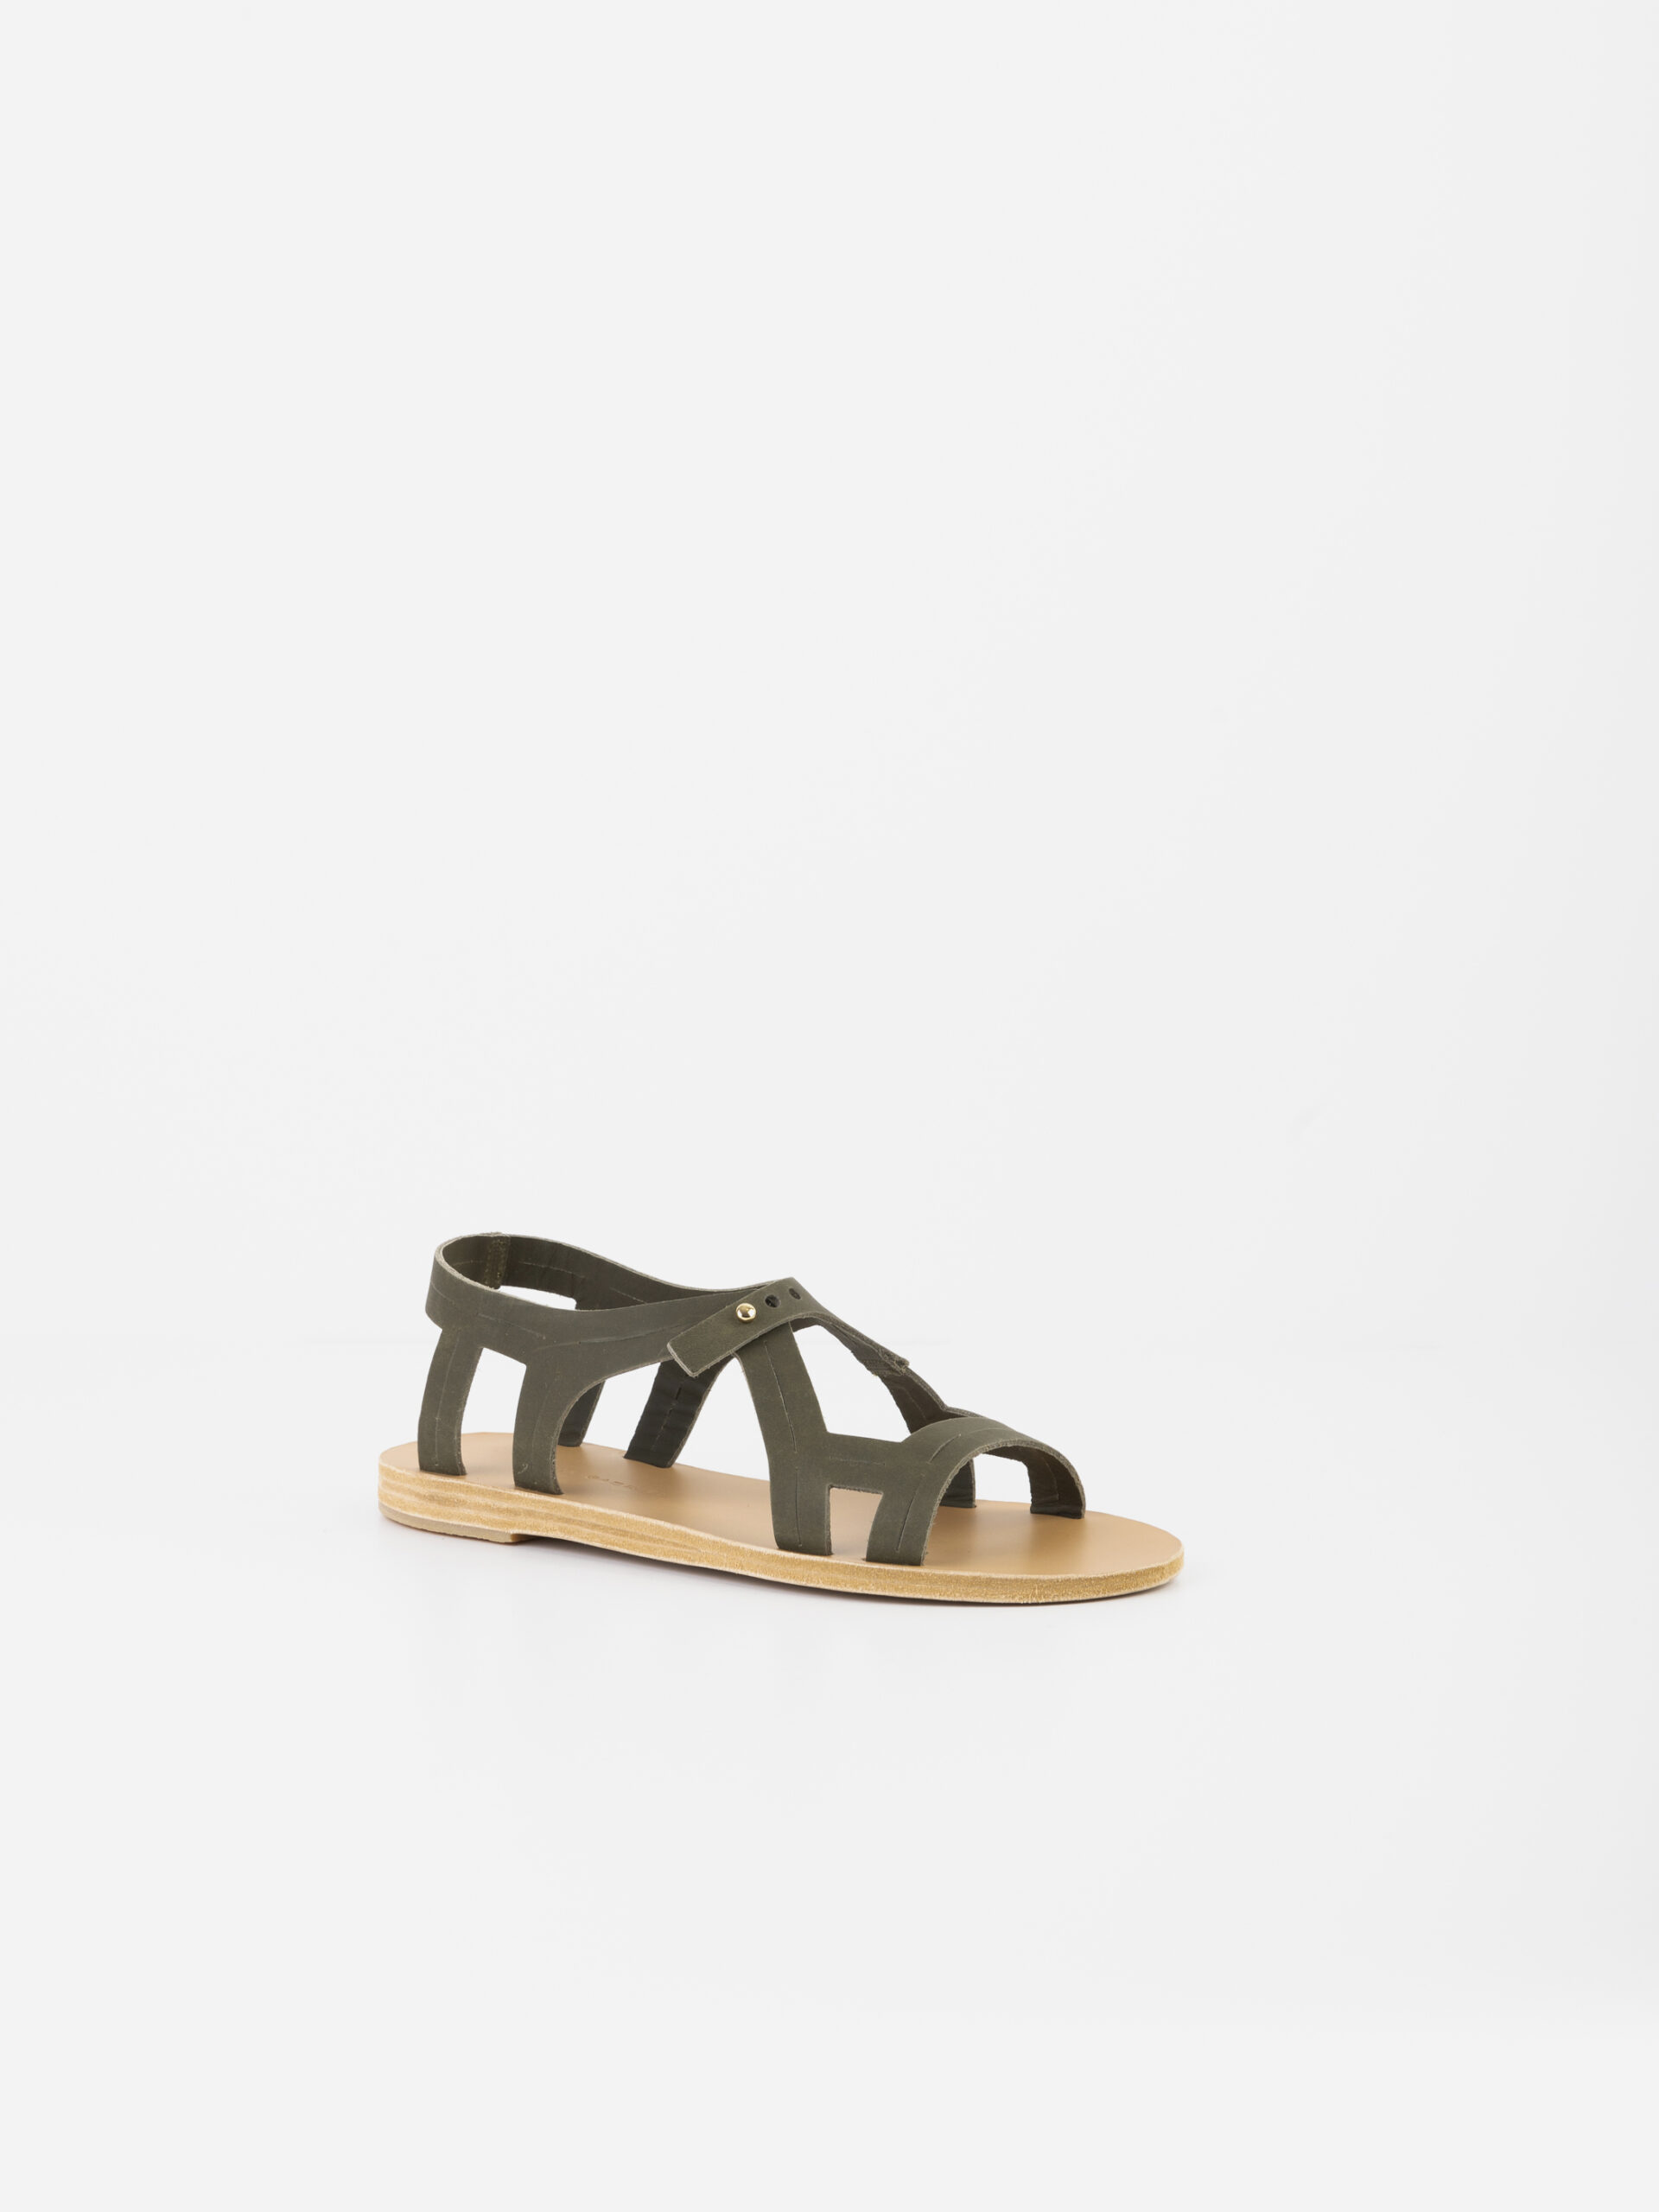 diana-military-sandals-soft-nubuck-leather-greek-designers-valia-gabriel-matchboxathens